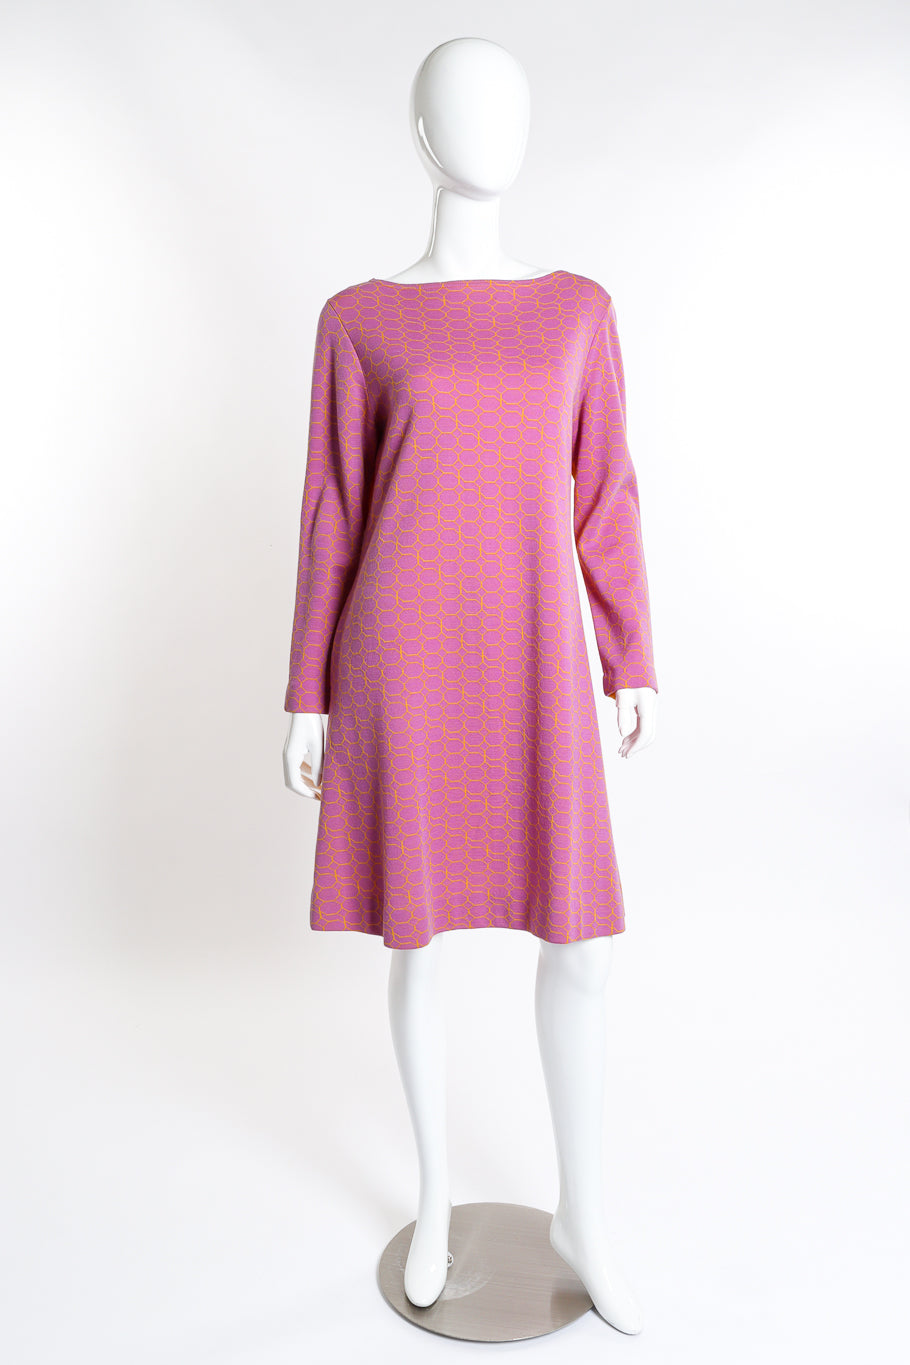 Vintage Rudi Gernreich Honeycomb Print Knit Dress front on mannequin @recess la